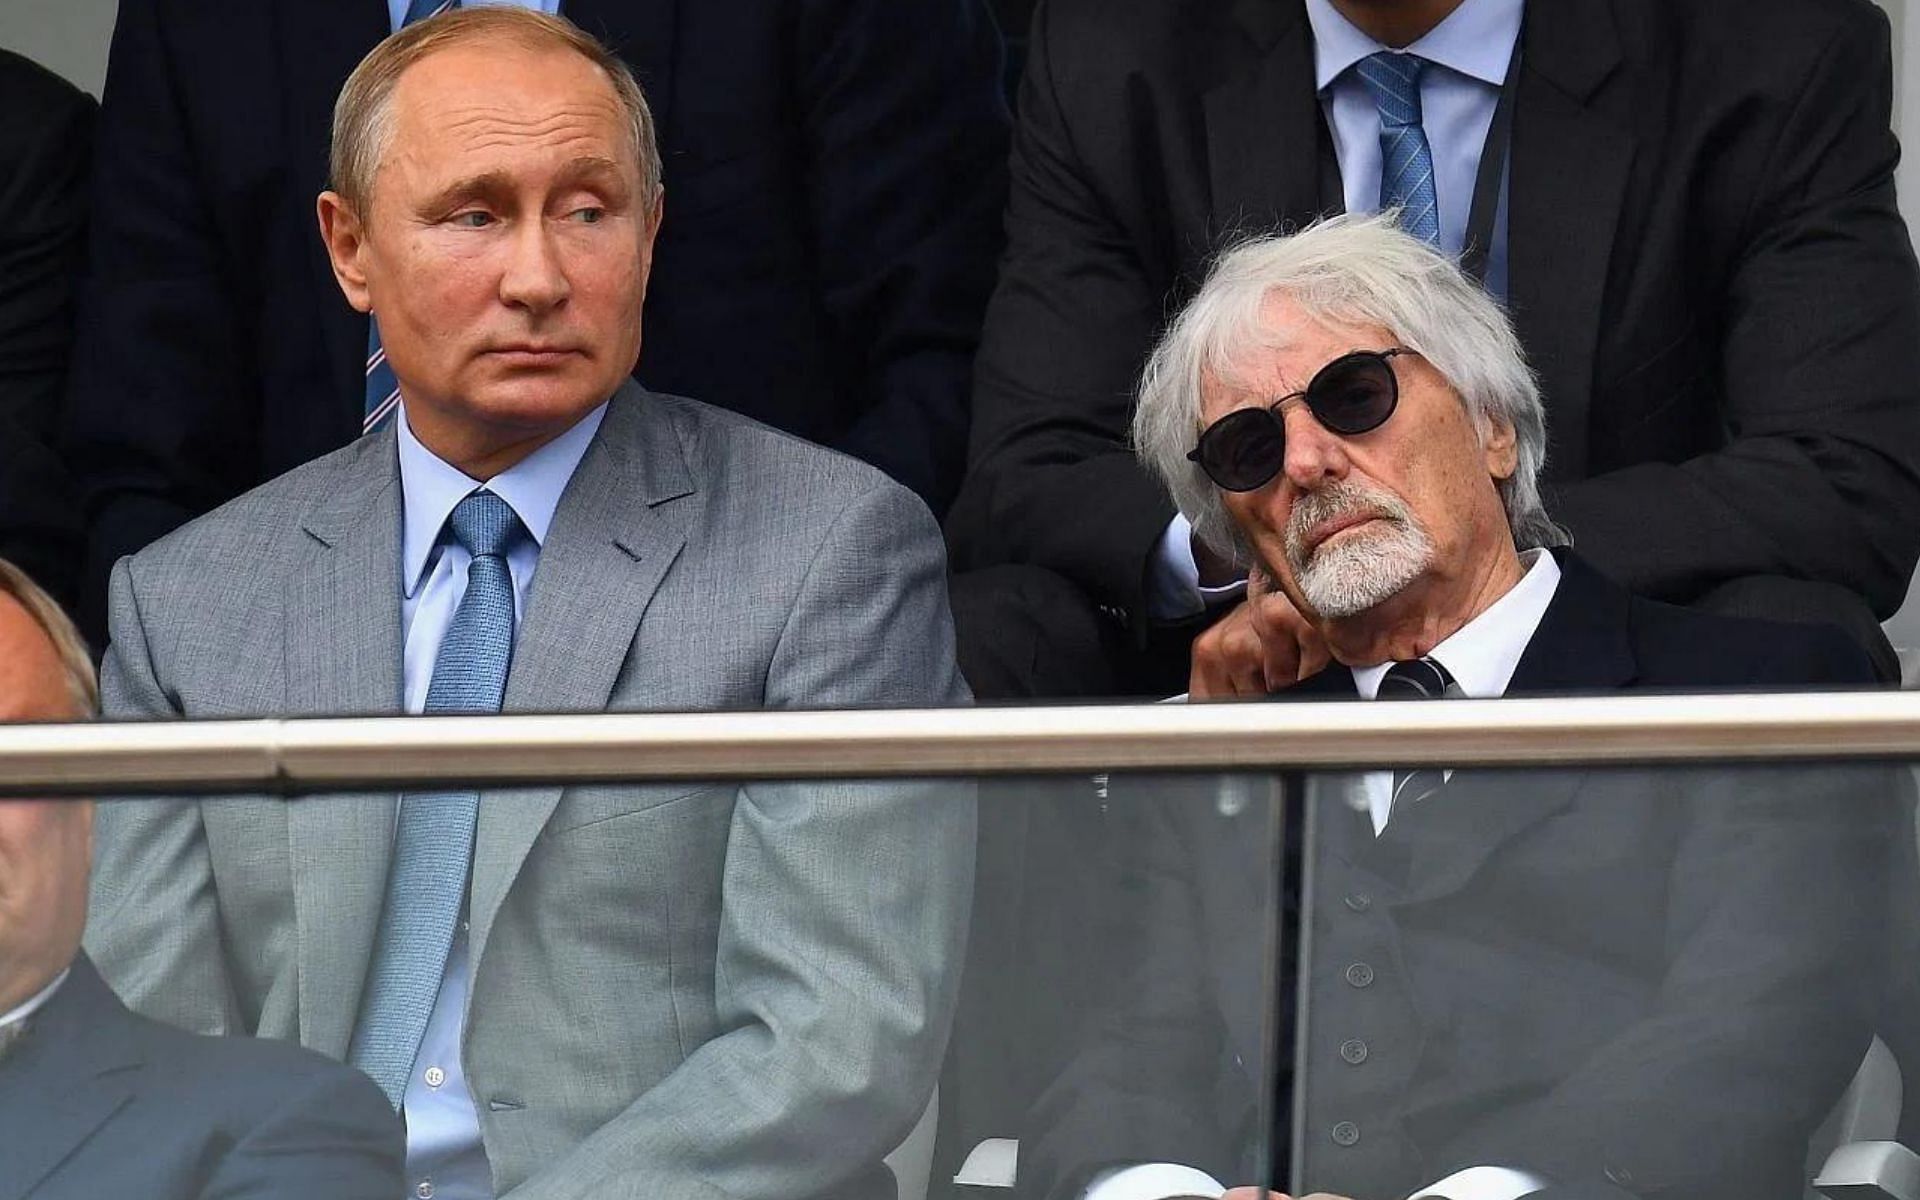 Bernie Ecclestone (right) with Russian President Vladimir Putin (left) at the 2018 Russian GP in Sochi